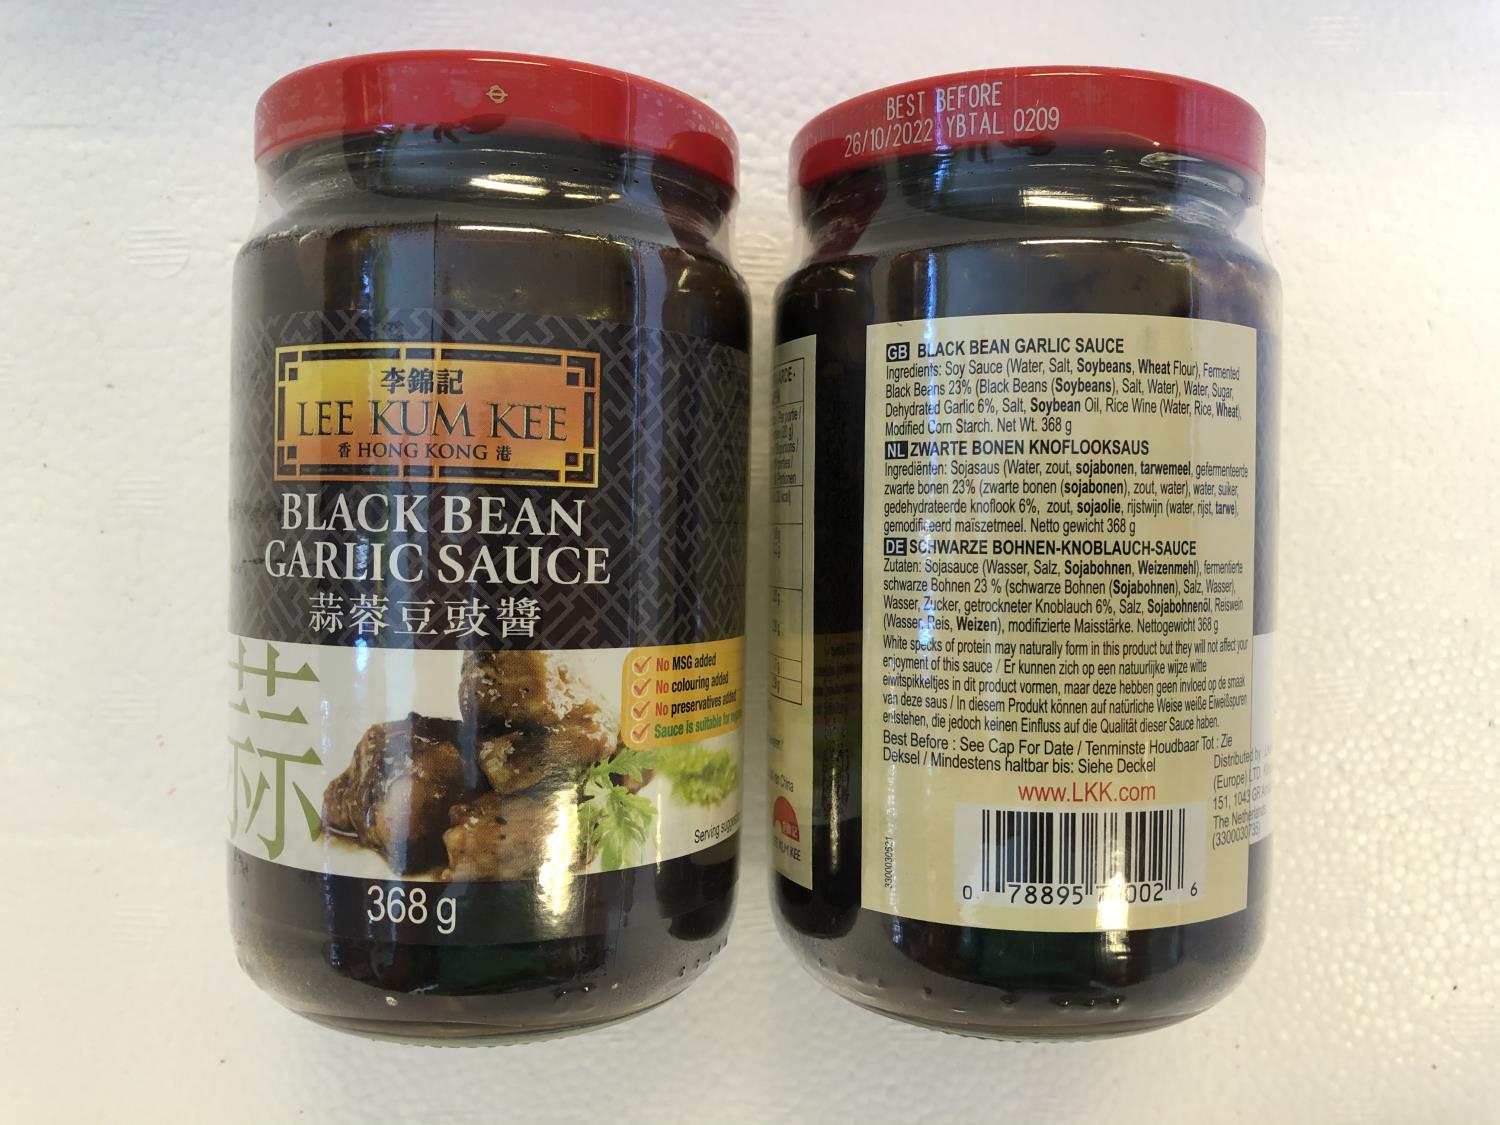 LEE KUM KEE Black Bean Garlic Sauce 368g